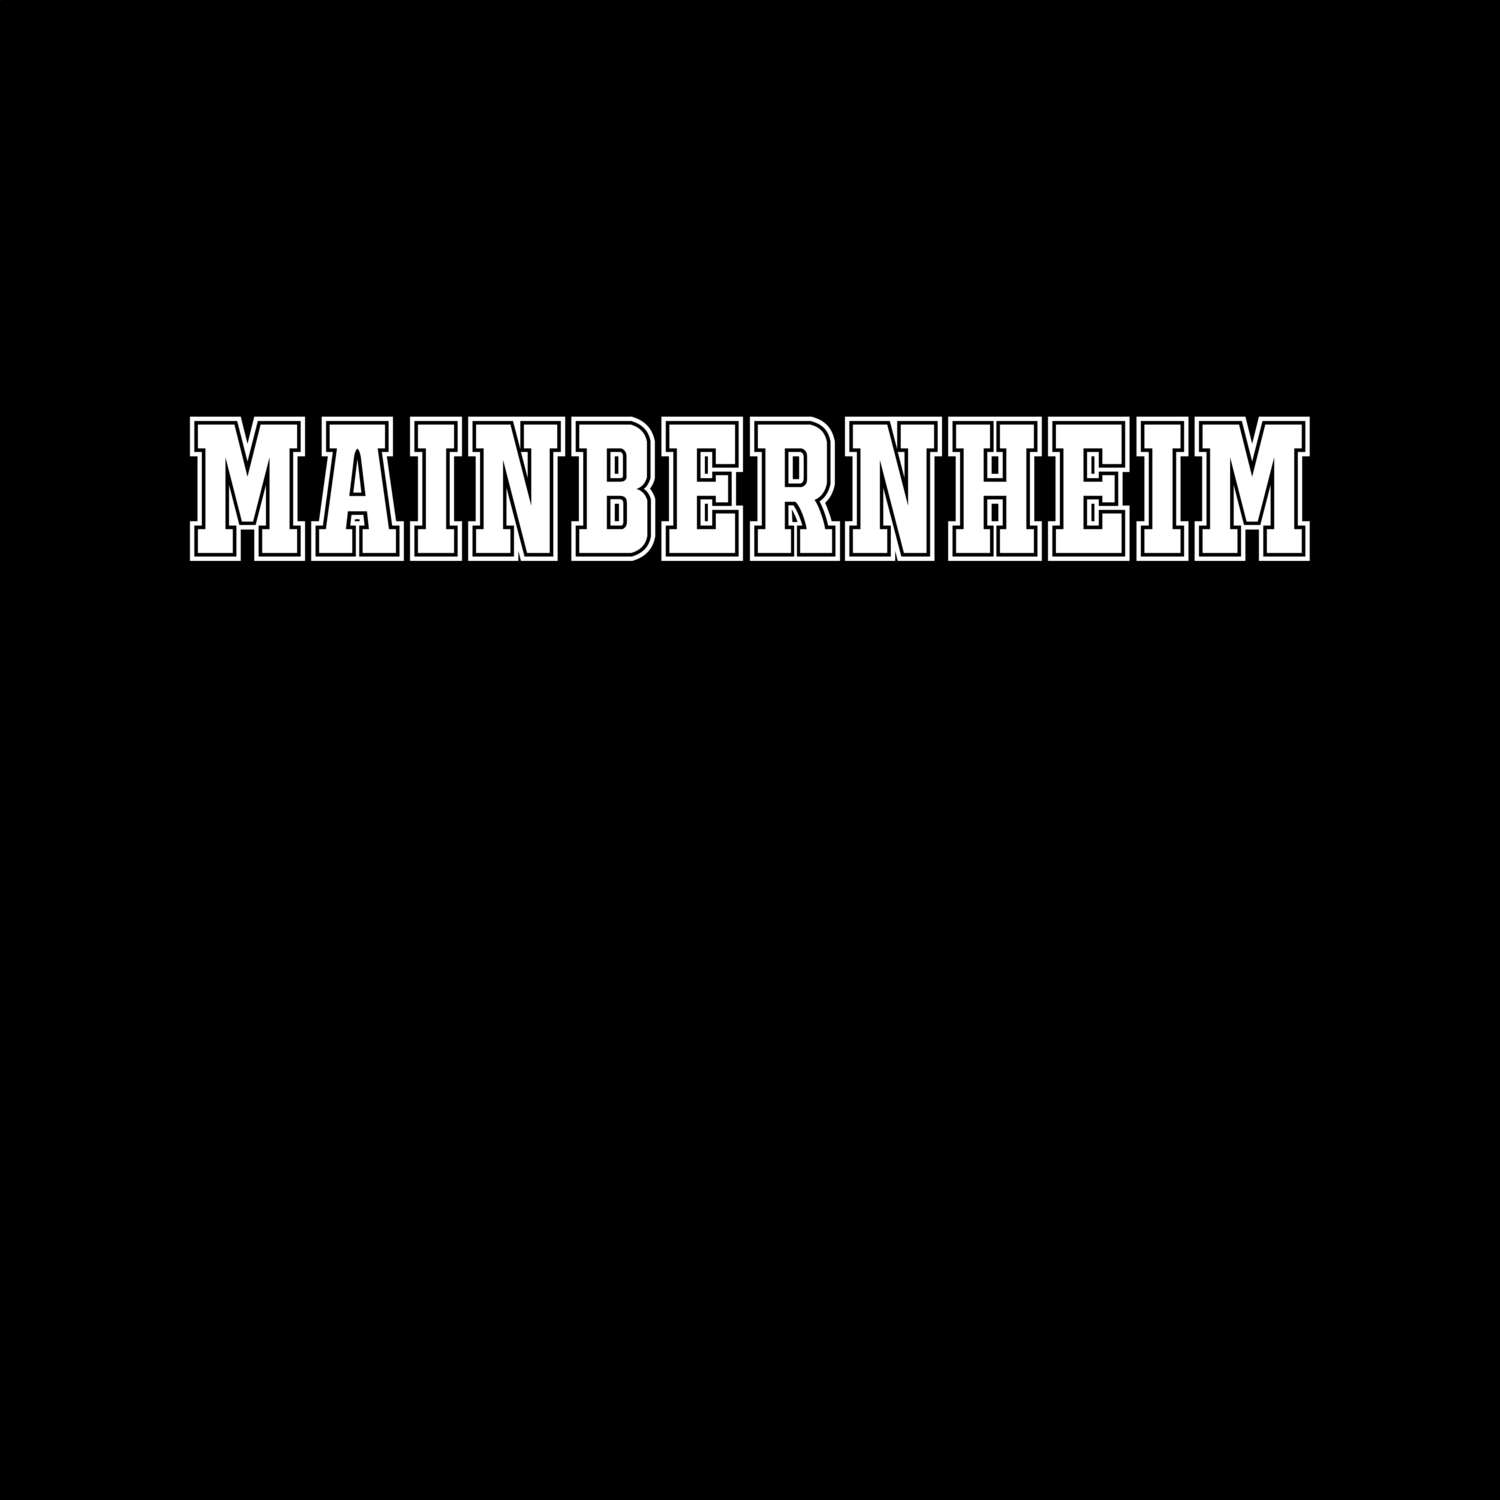 Mainbernheim T-Shirt »Classic«